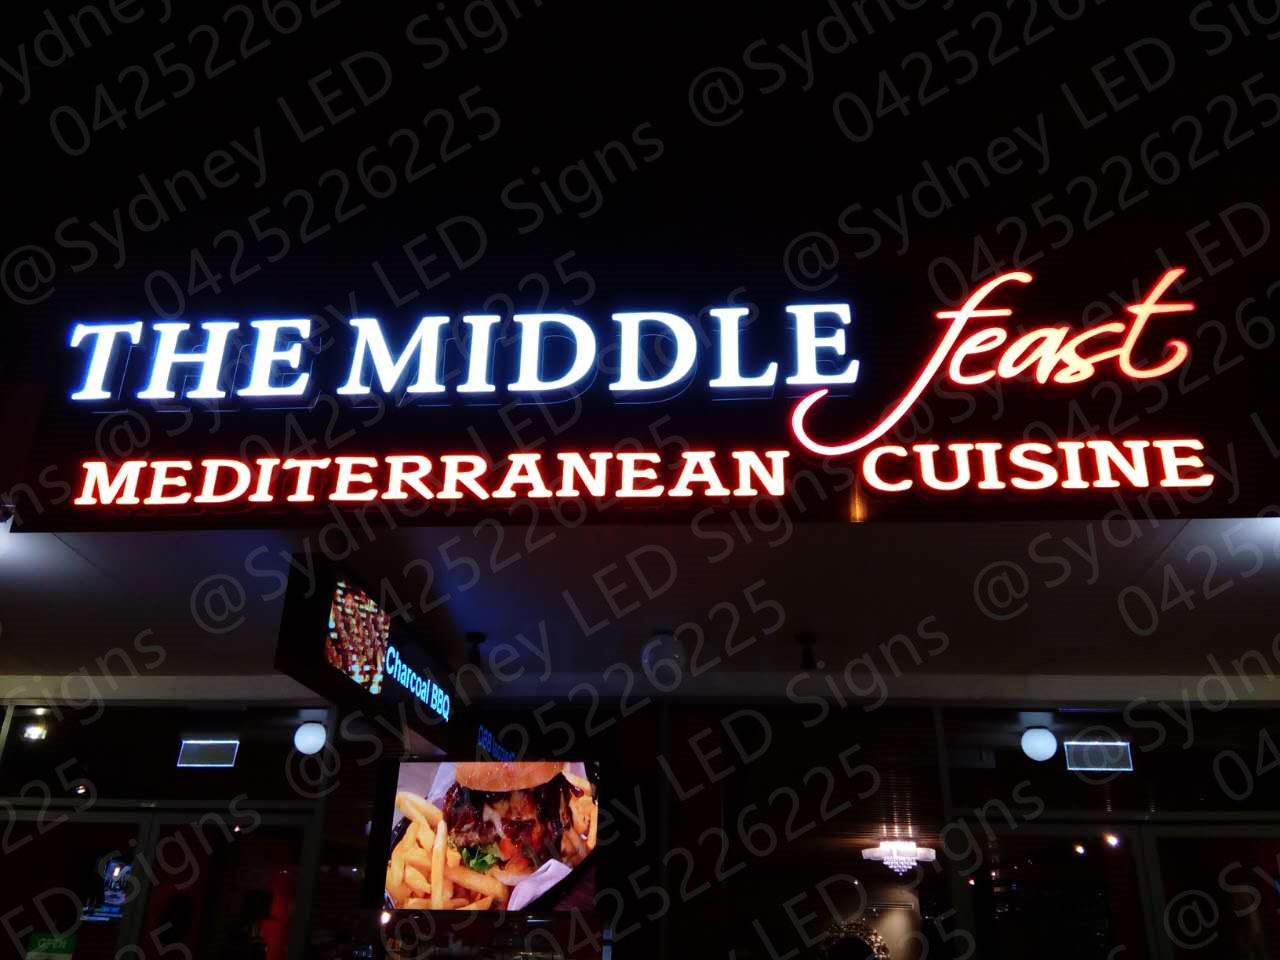 sydneyledsigns_3d_illuminated_letter_shop_sign_for_restaurant_cuisine_6-1